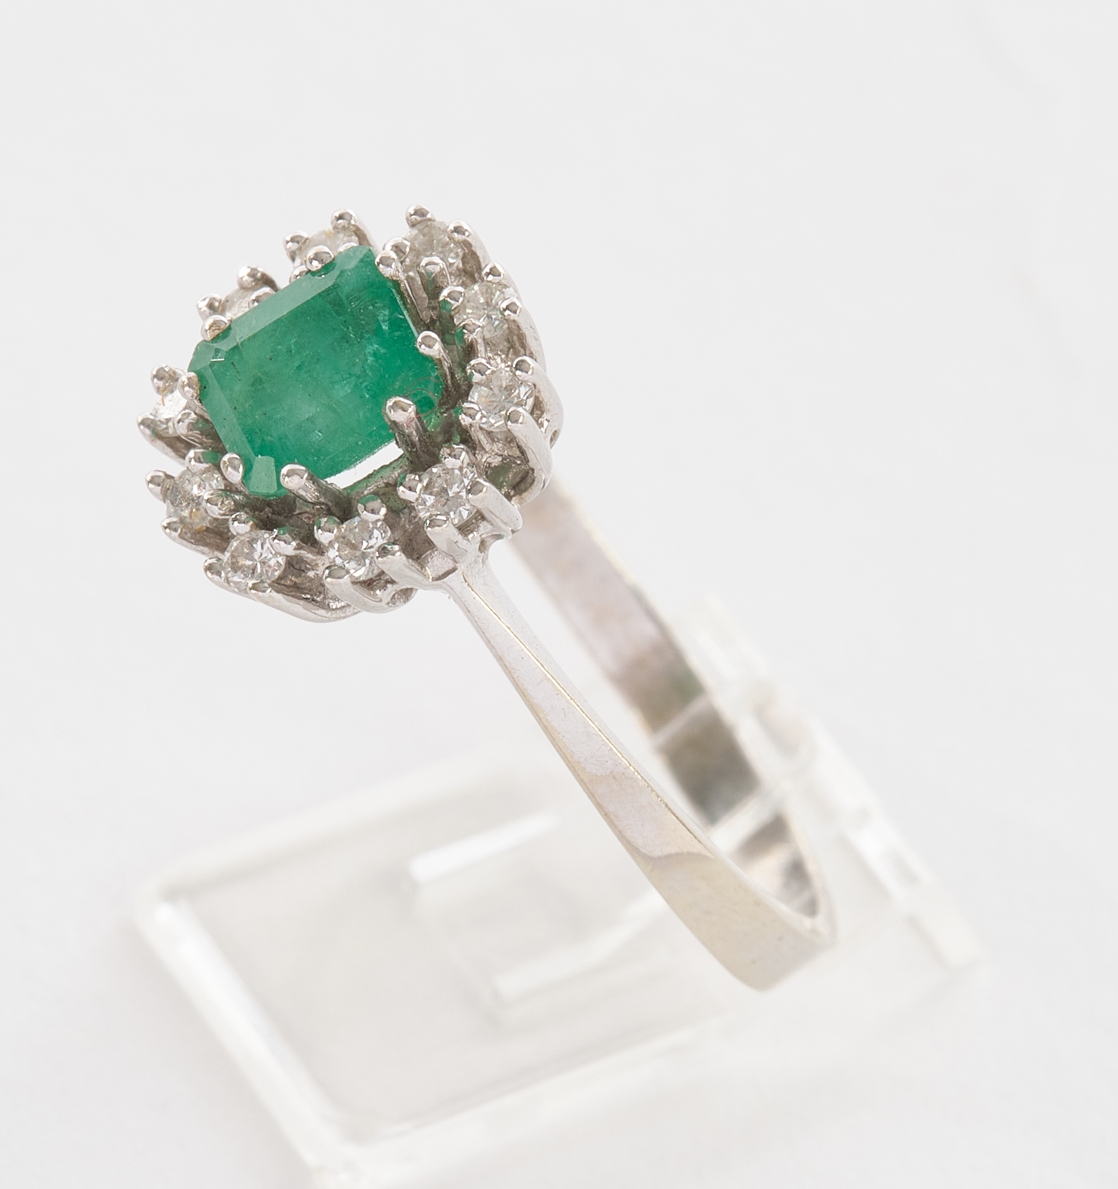 Smaragdring, GG 585, 10 Brillanten zus. ca. 0.25 ct., 1 rechteckiger Smaragd, 3.4 g, RM 20 - Image 2 of 3